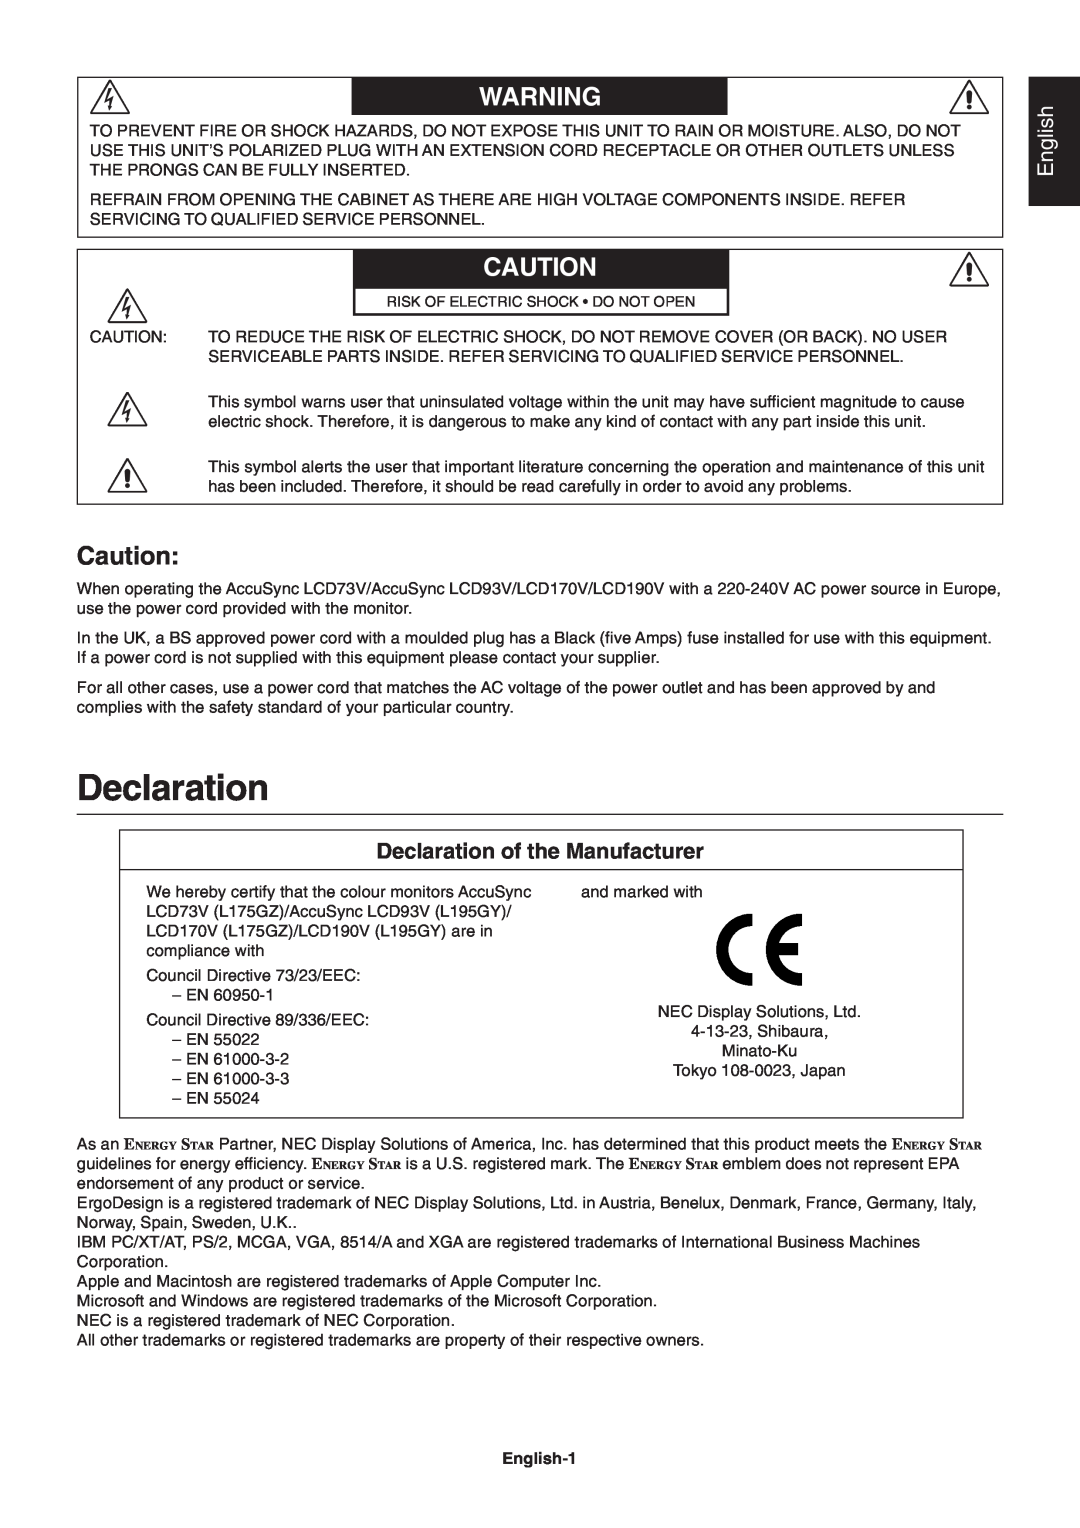 NEC LCD190V, LCD93V, LCD73V, LCD170V user manual Declaration of the Manufacturer, English-1 